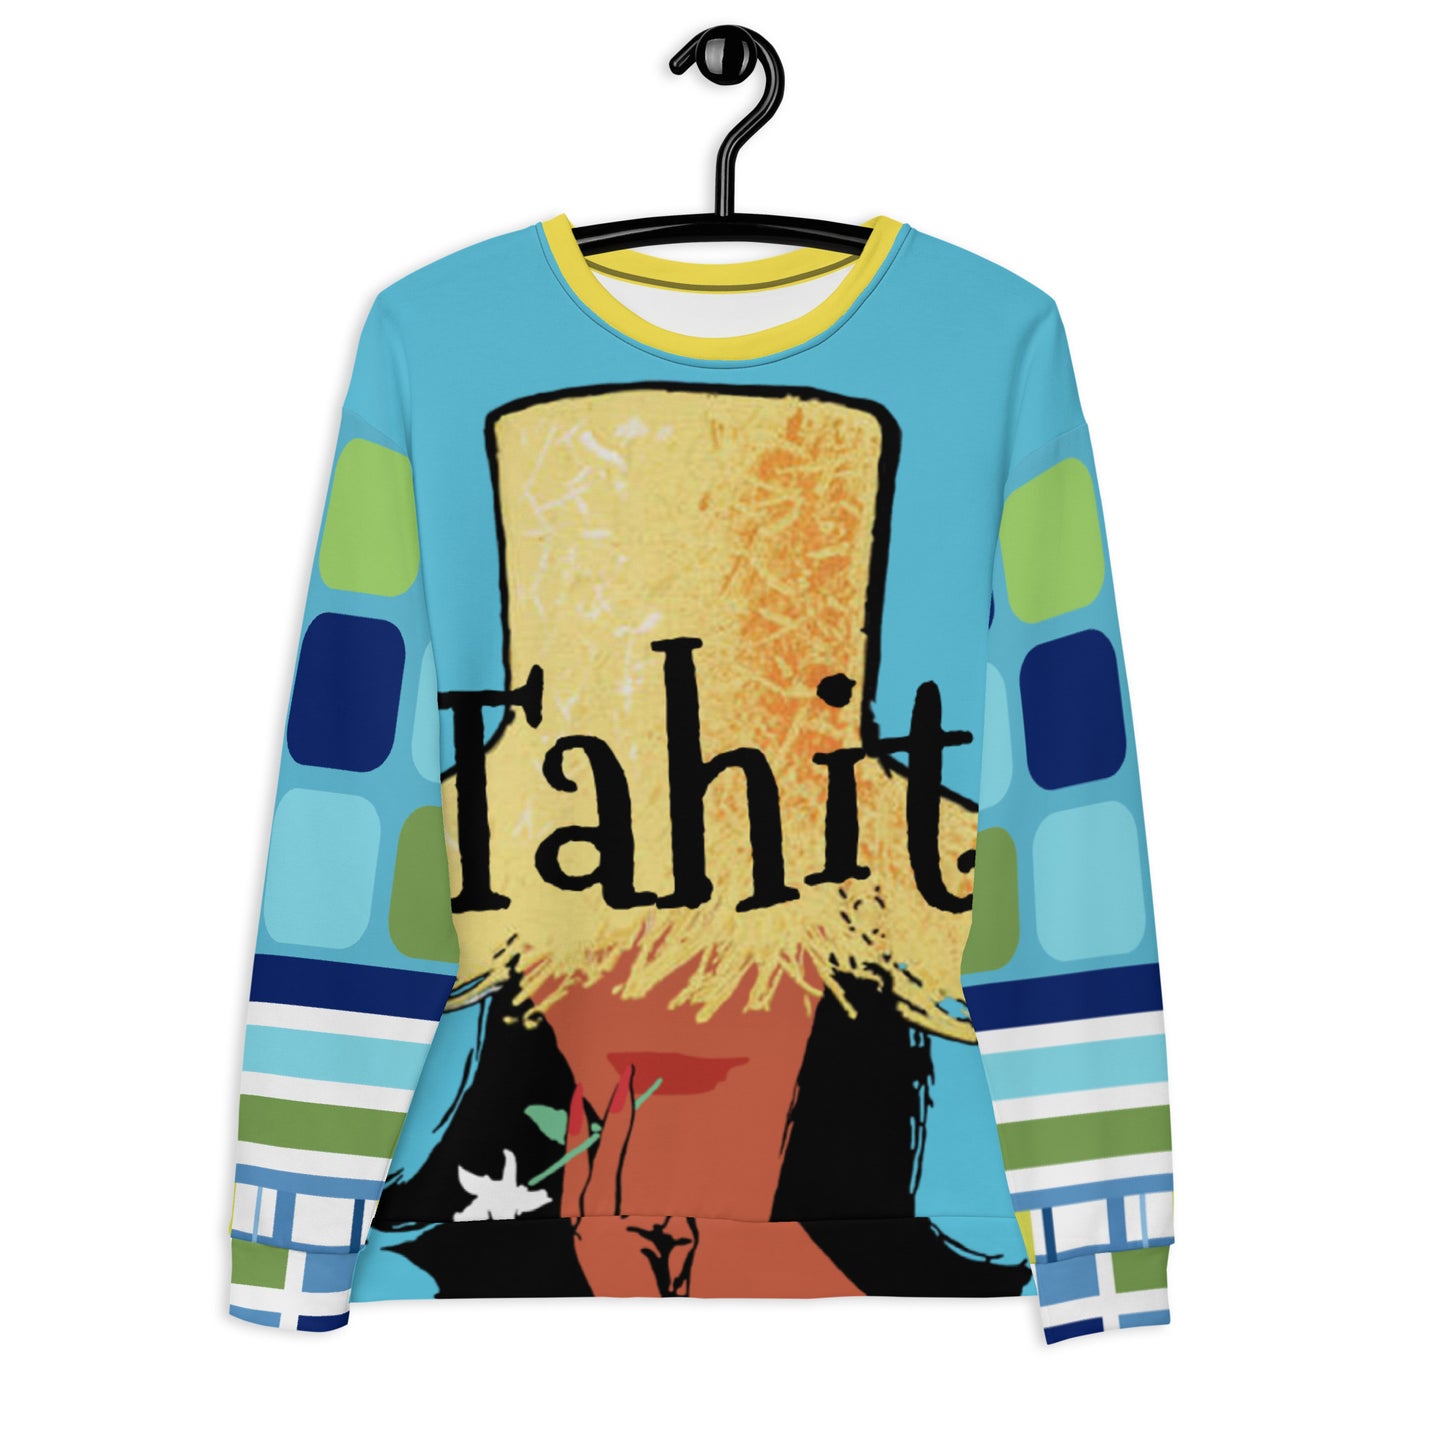 Tahiti Girl Bright Lights Unisex Sweatshirt